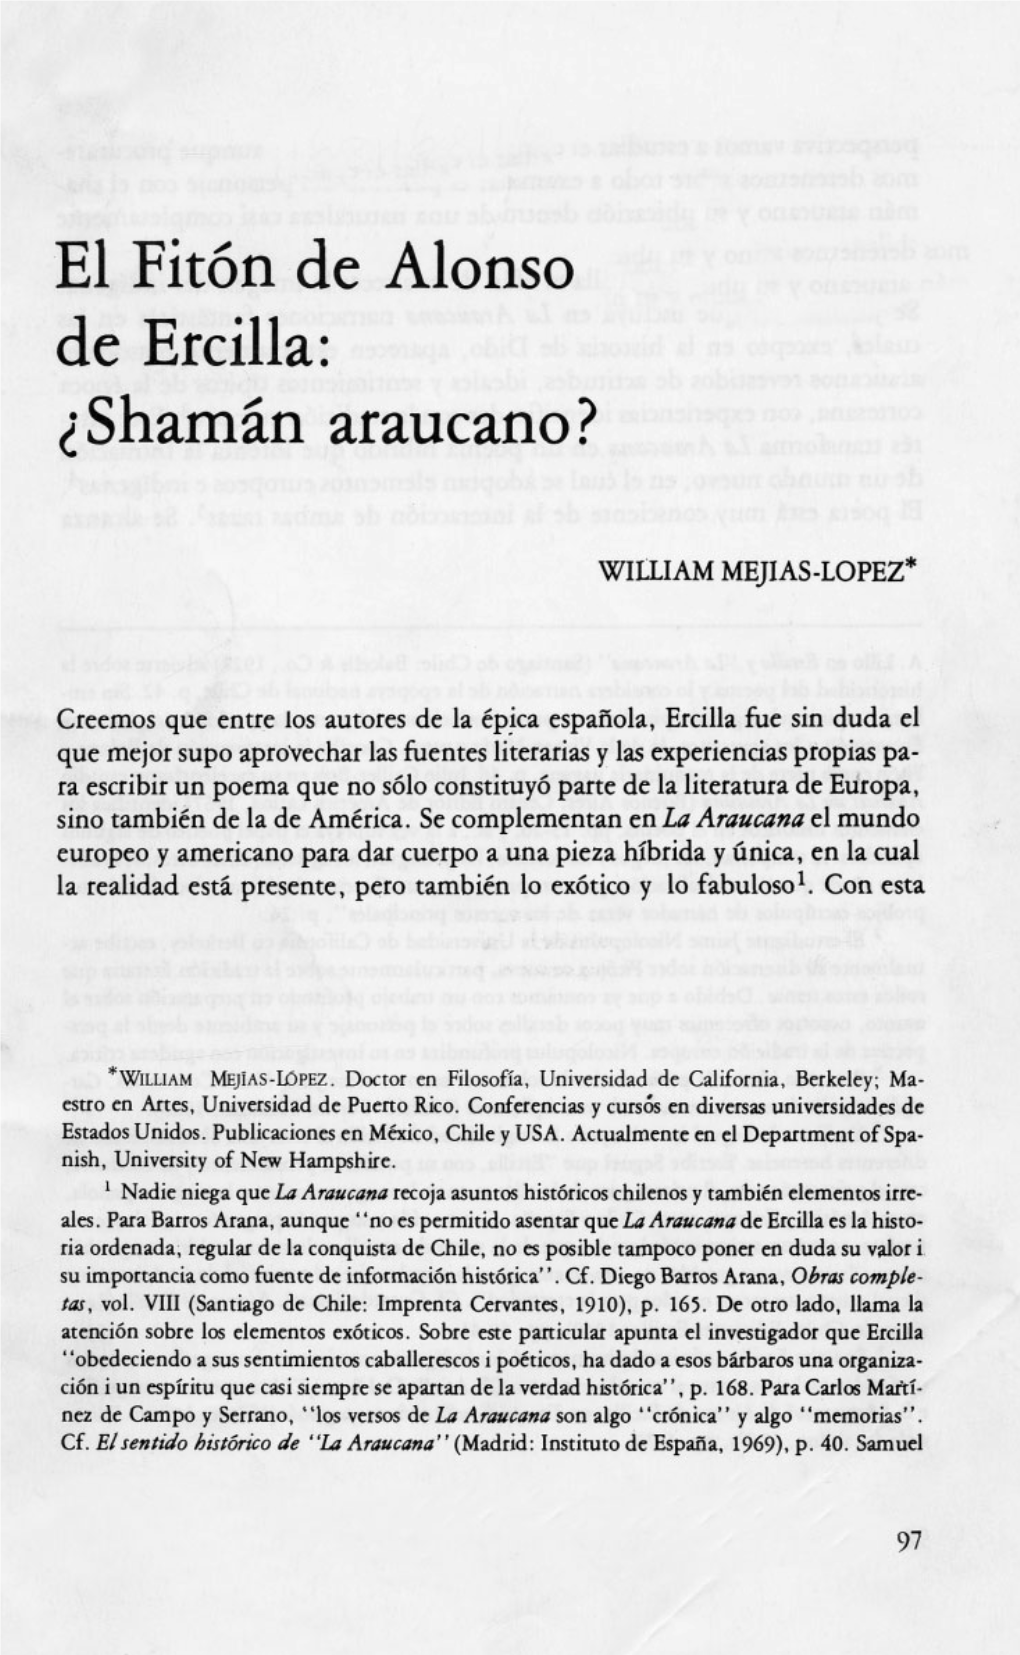 El Fit6n De Alonso De Ercilla: Ishamiin Araucano?